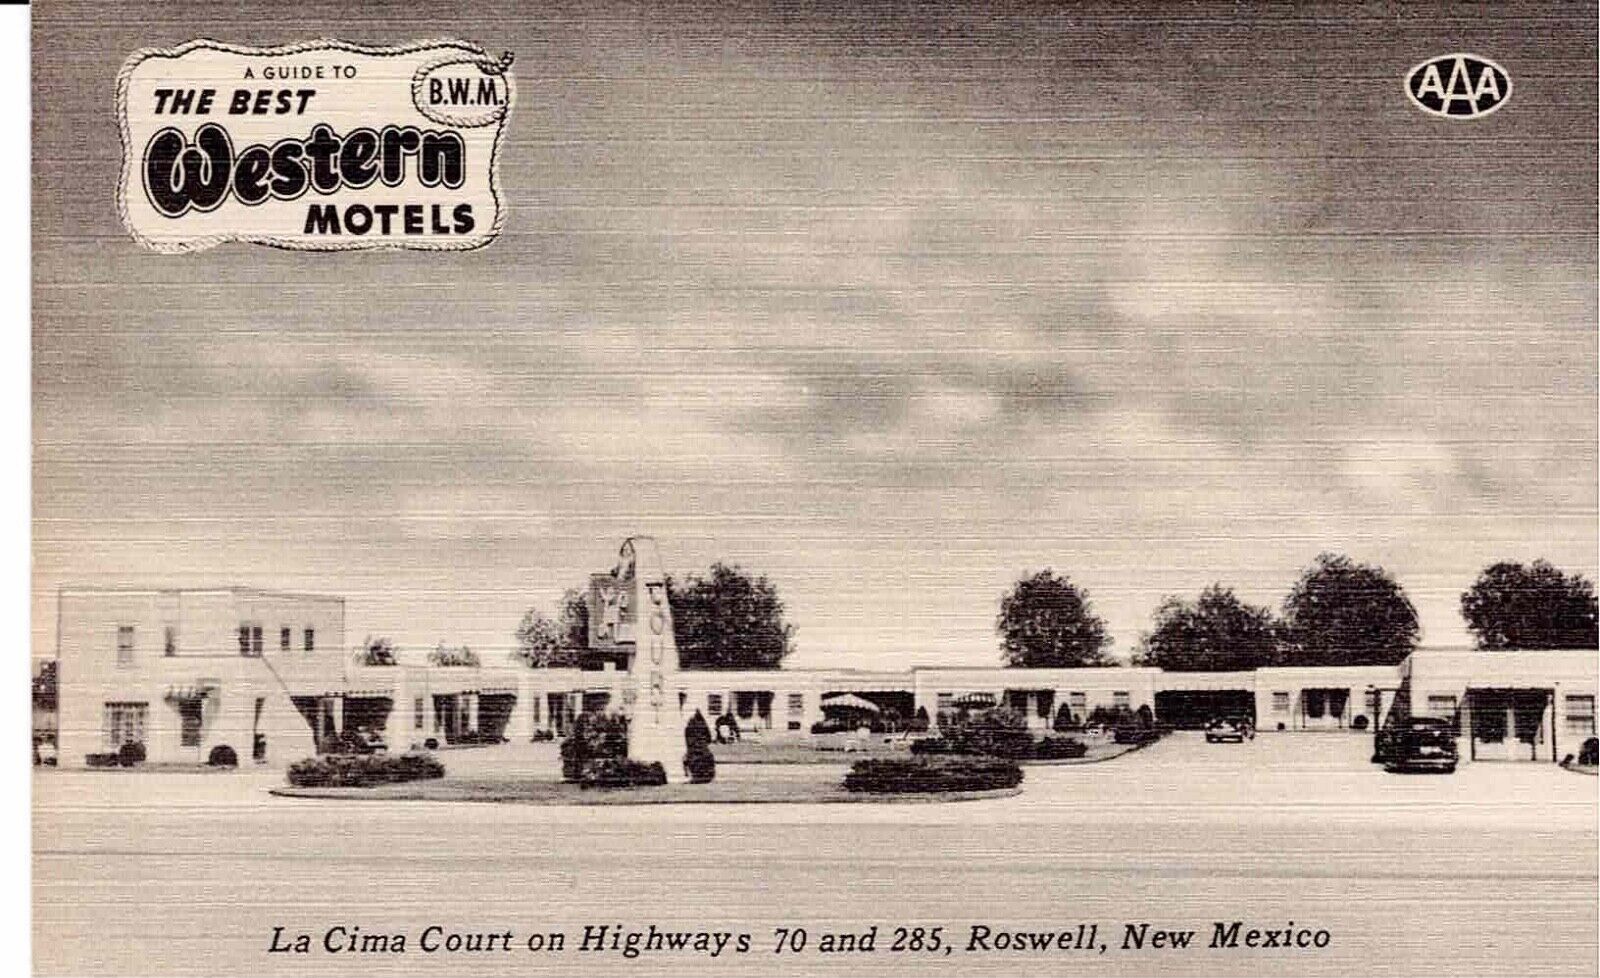 ROSWELL, NEW MEXICO MOTEL POSTCARD La Cima Court, The Best Western Motels, B&W